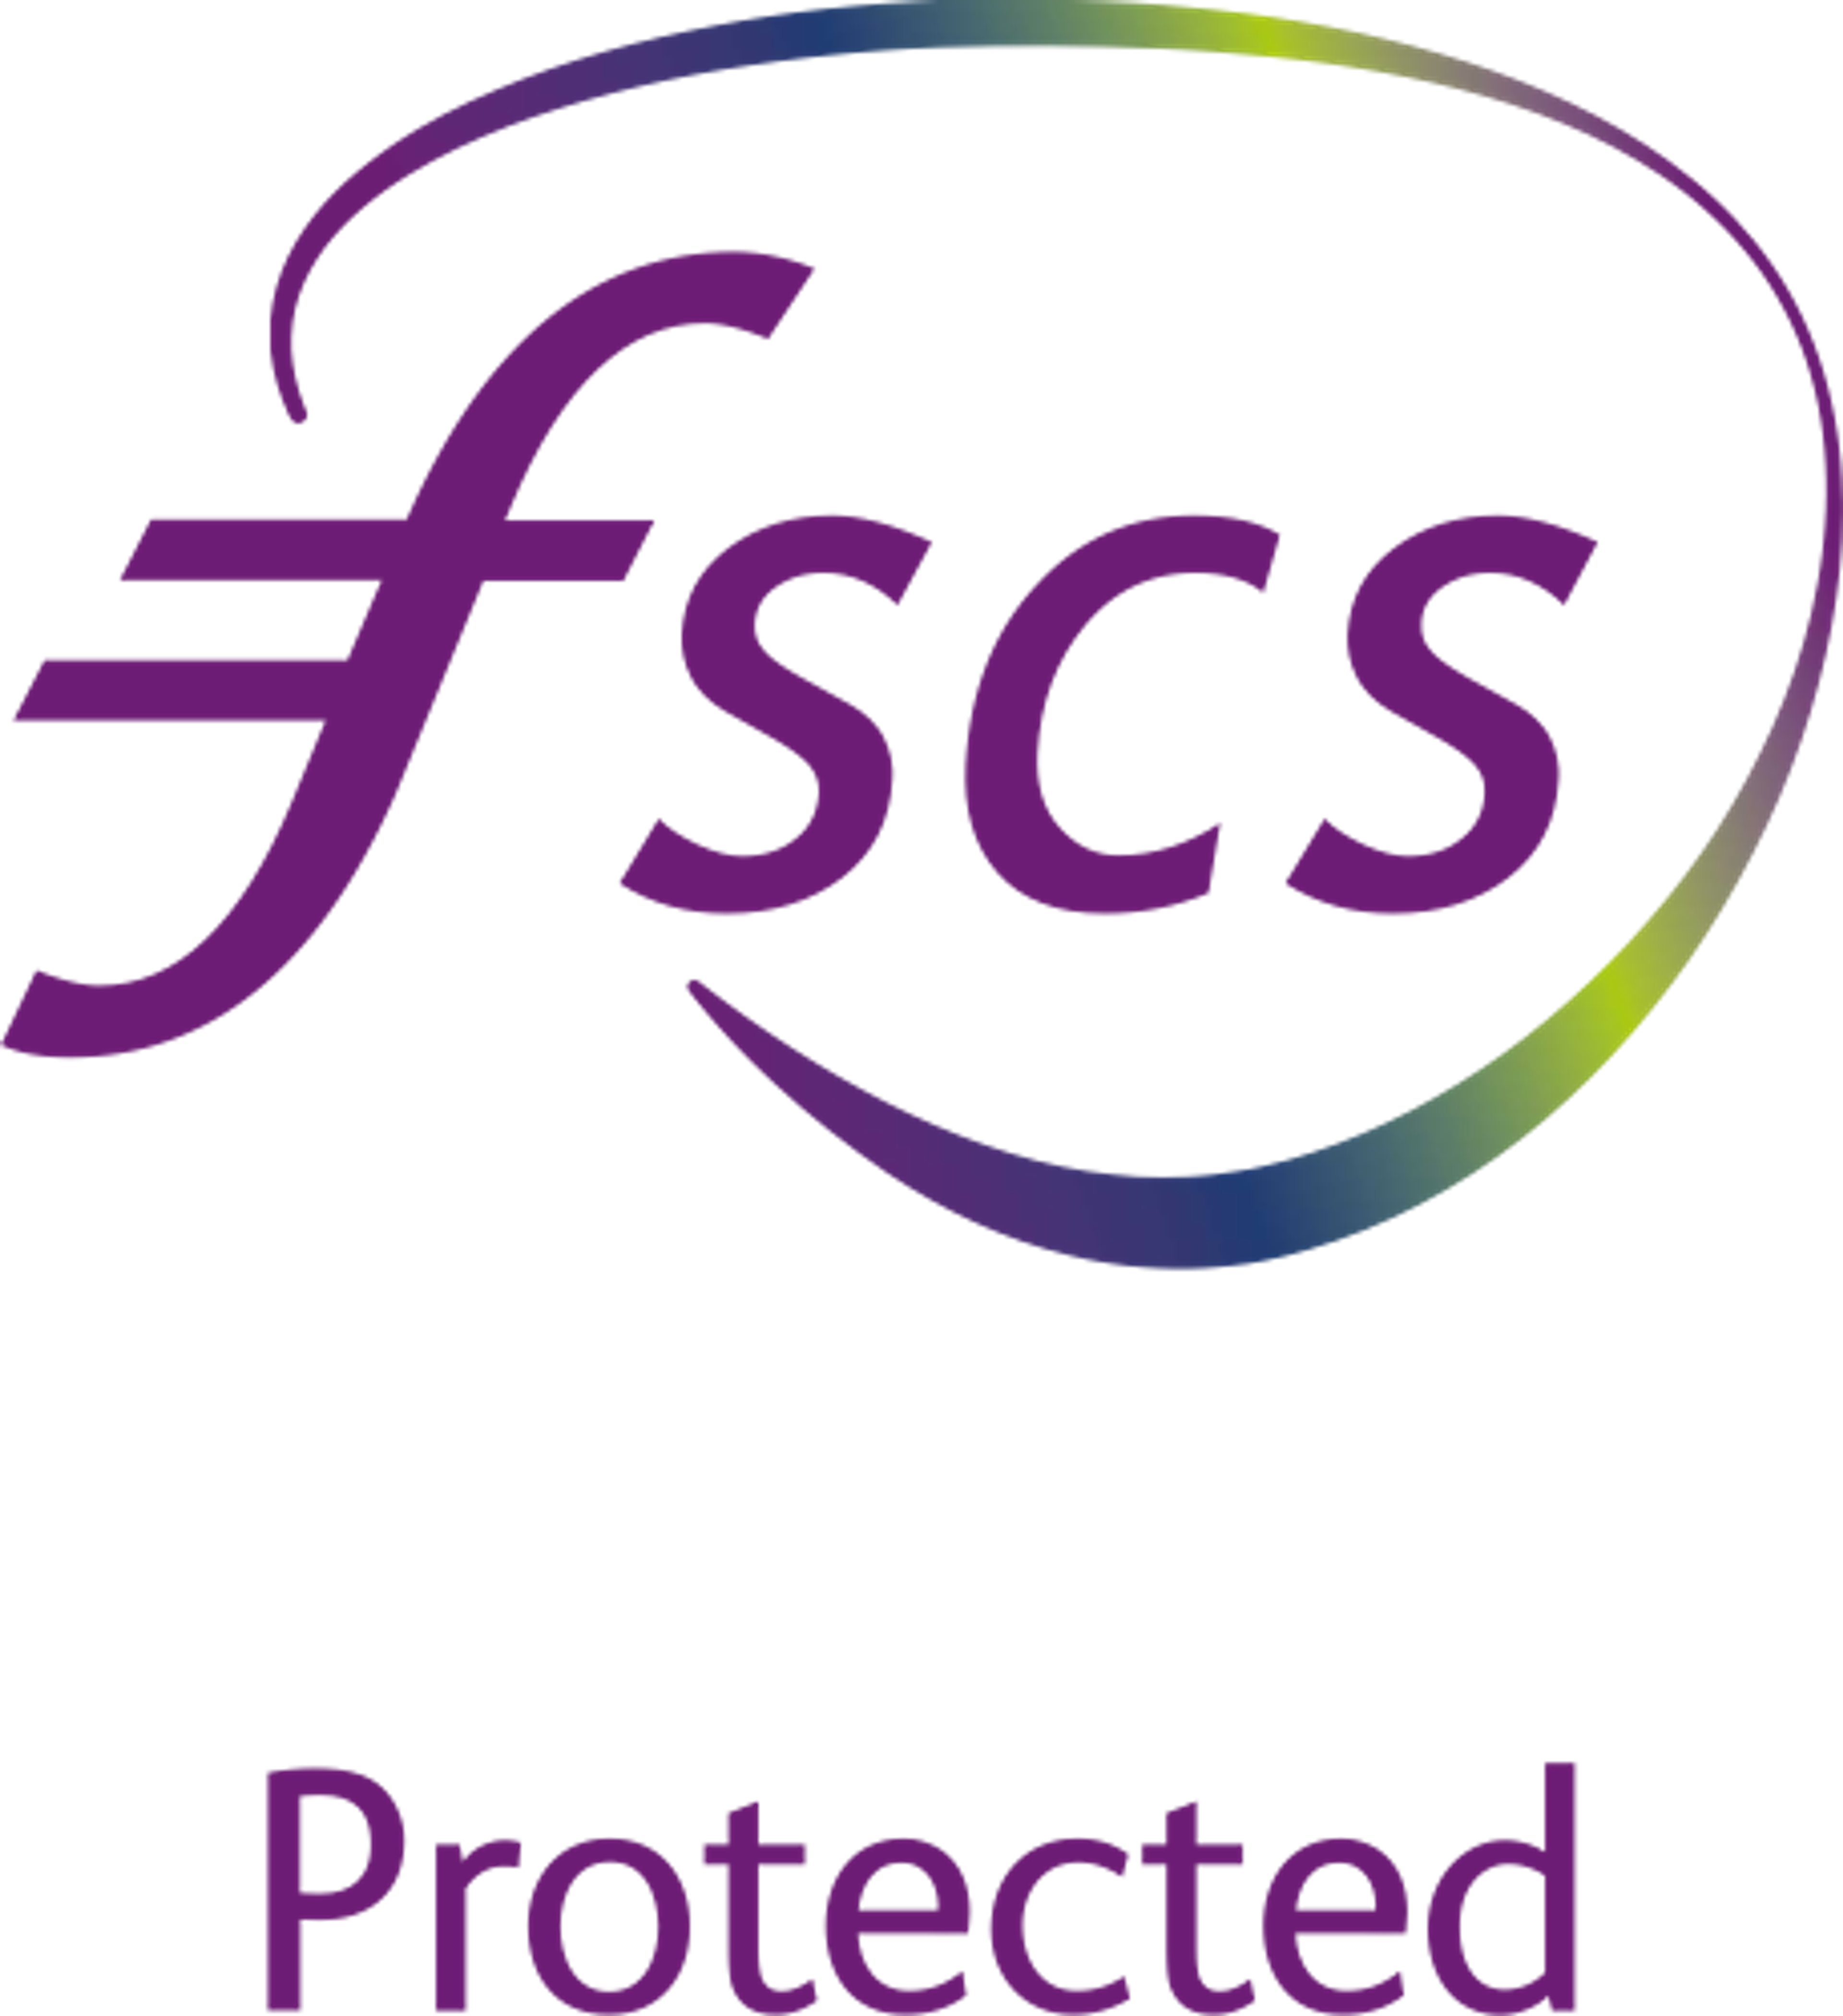 FSCS Protected logo